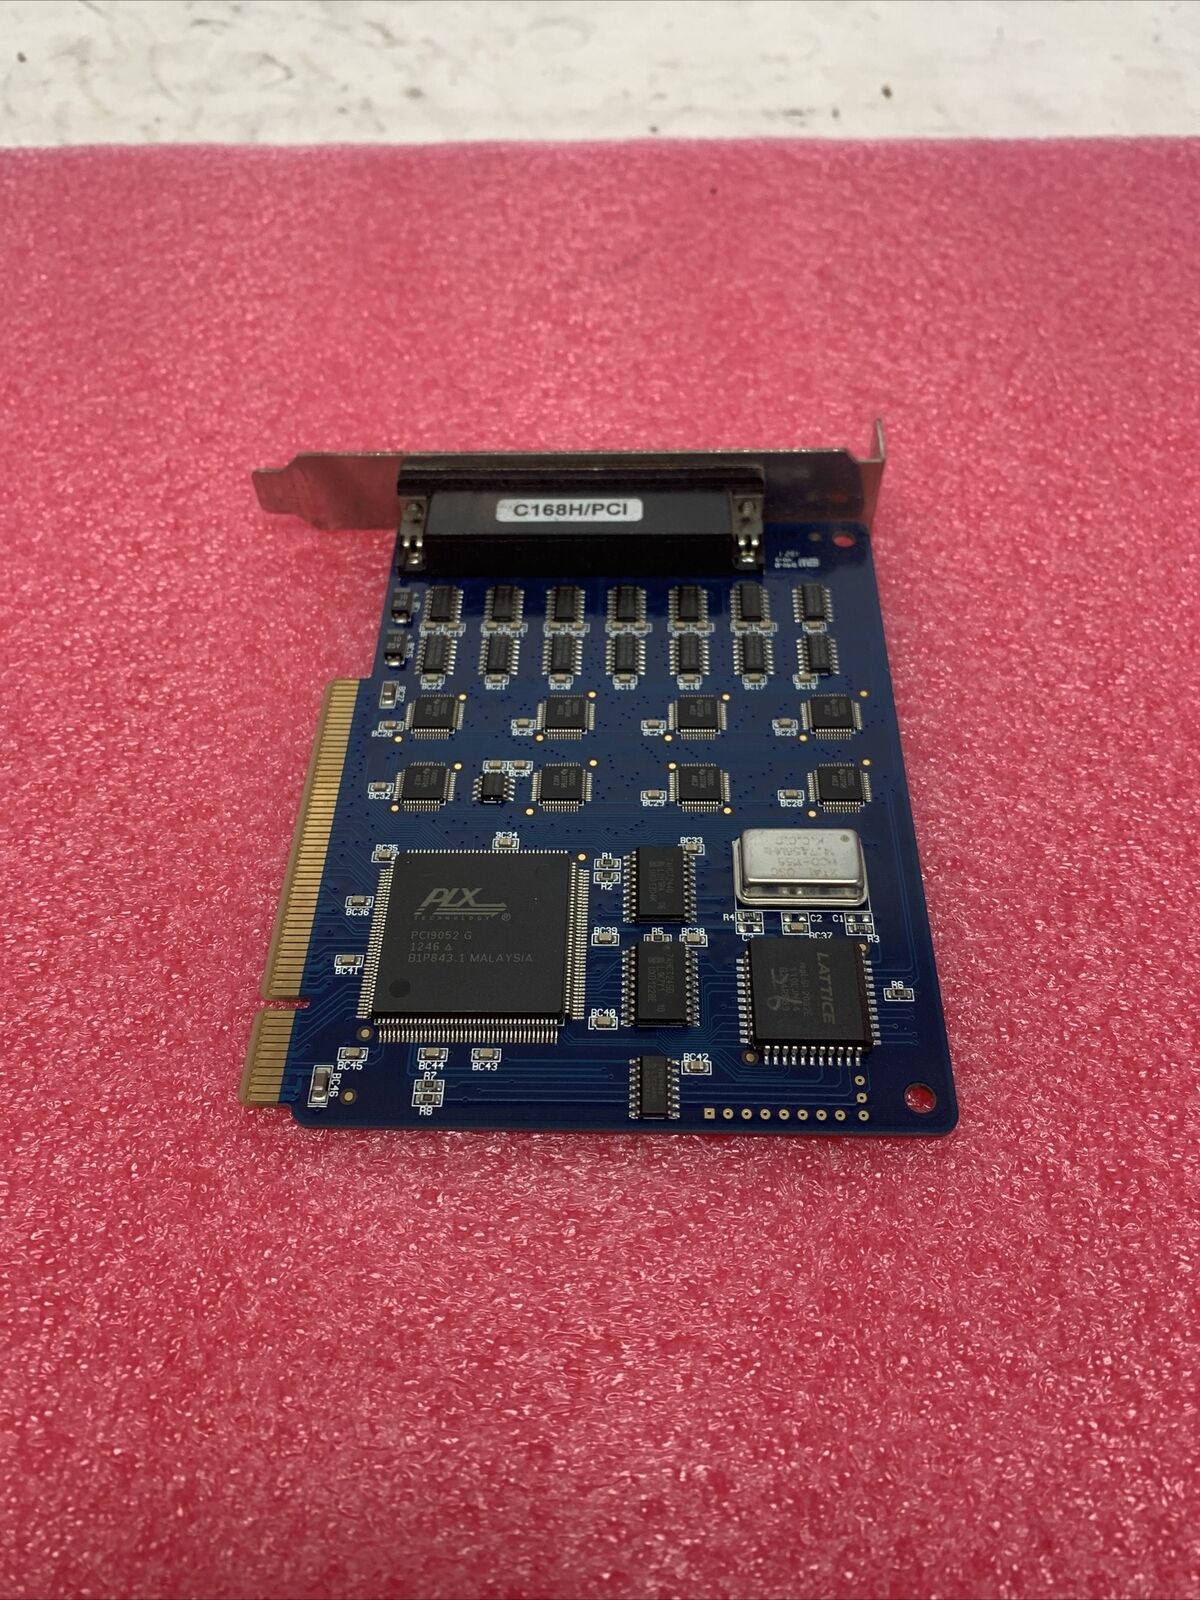 C168H PCI 8-Port RS-232 PCI Serial Card